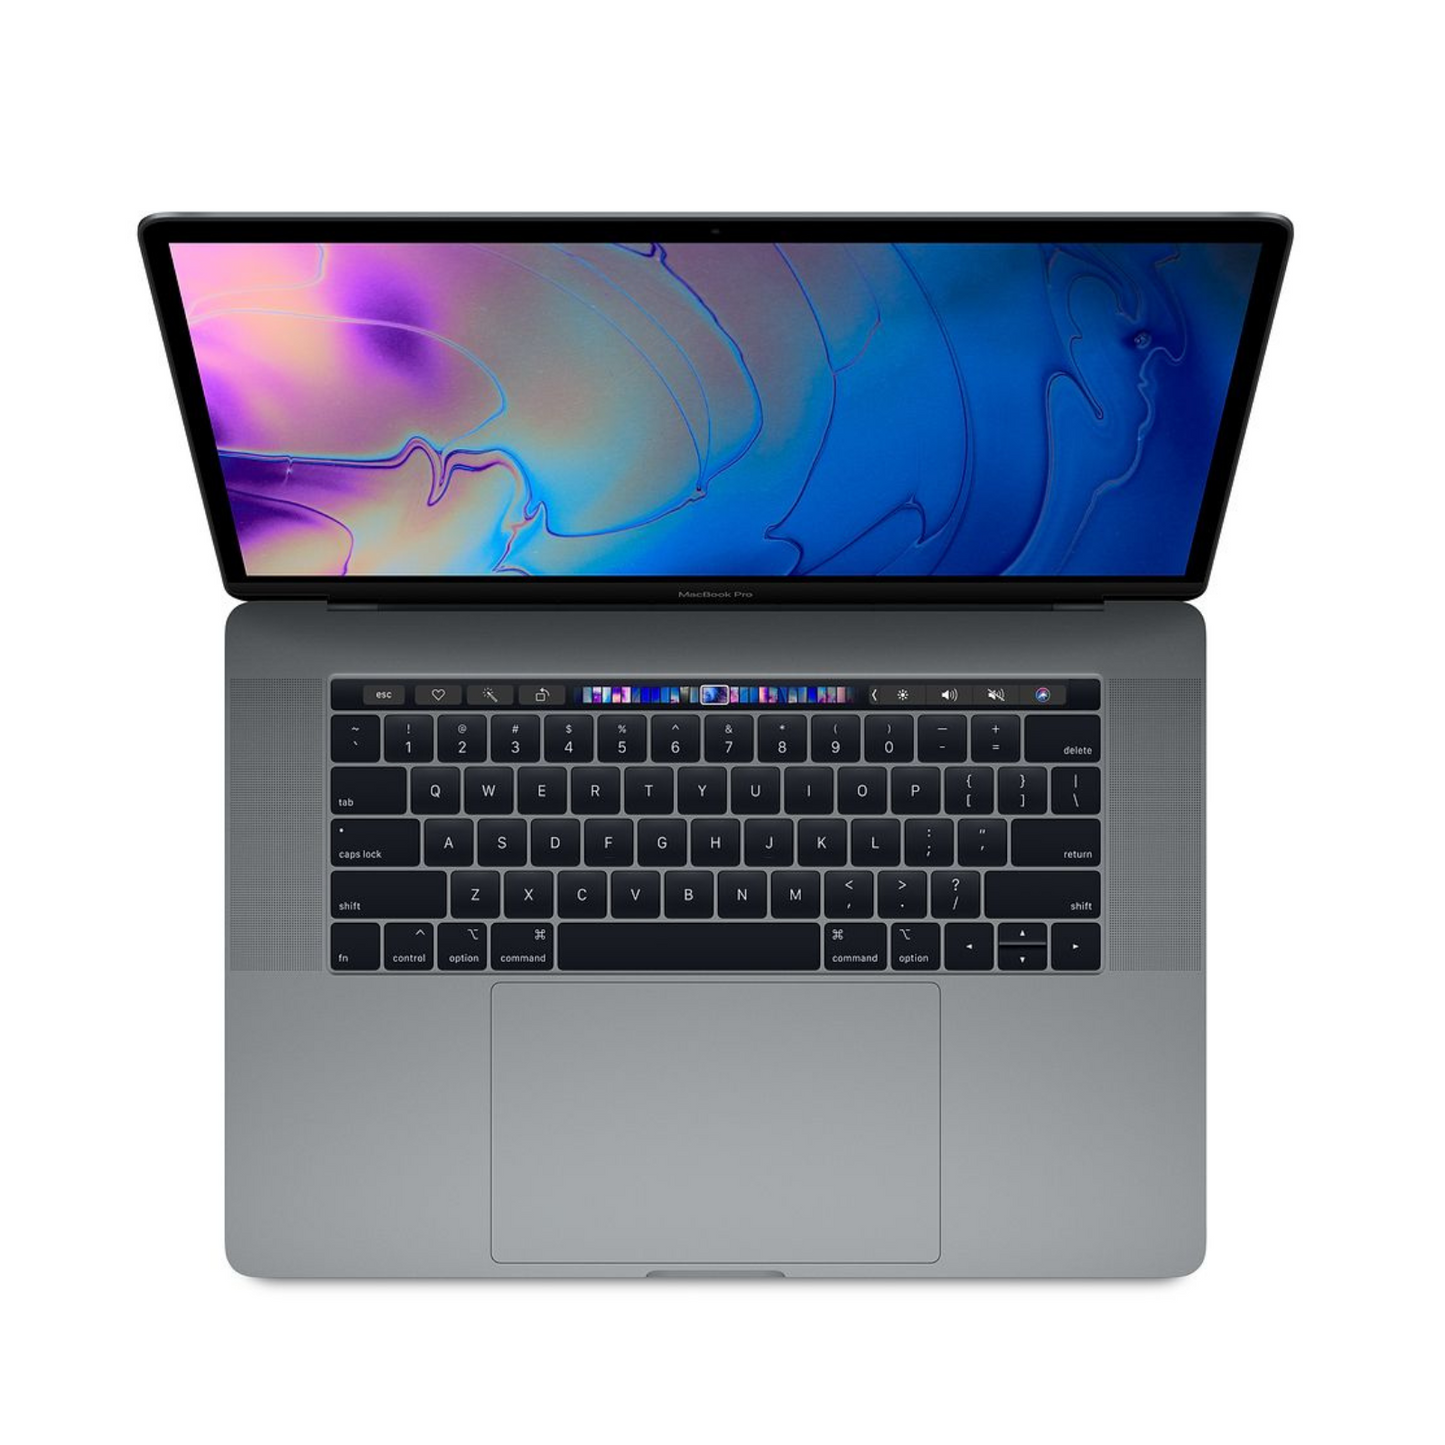 MacBook Pro (15-inch, 2018) Intel Core i9  -  32GB RAM, 512GB SSD - Radeon Pro 555 with 4GB - Mac OS Sonoma